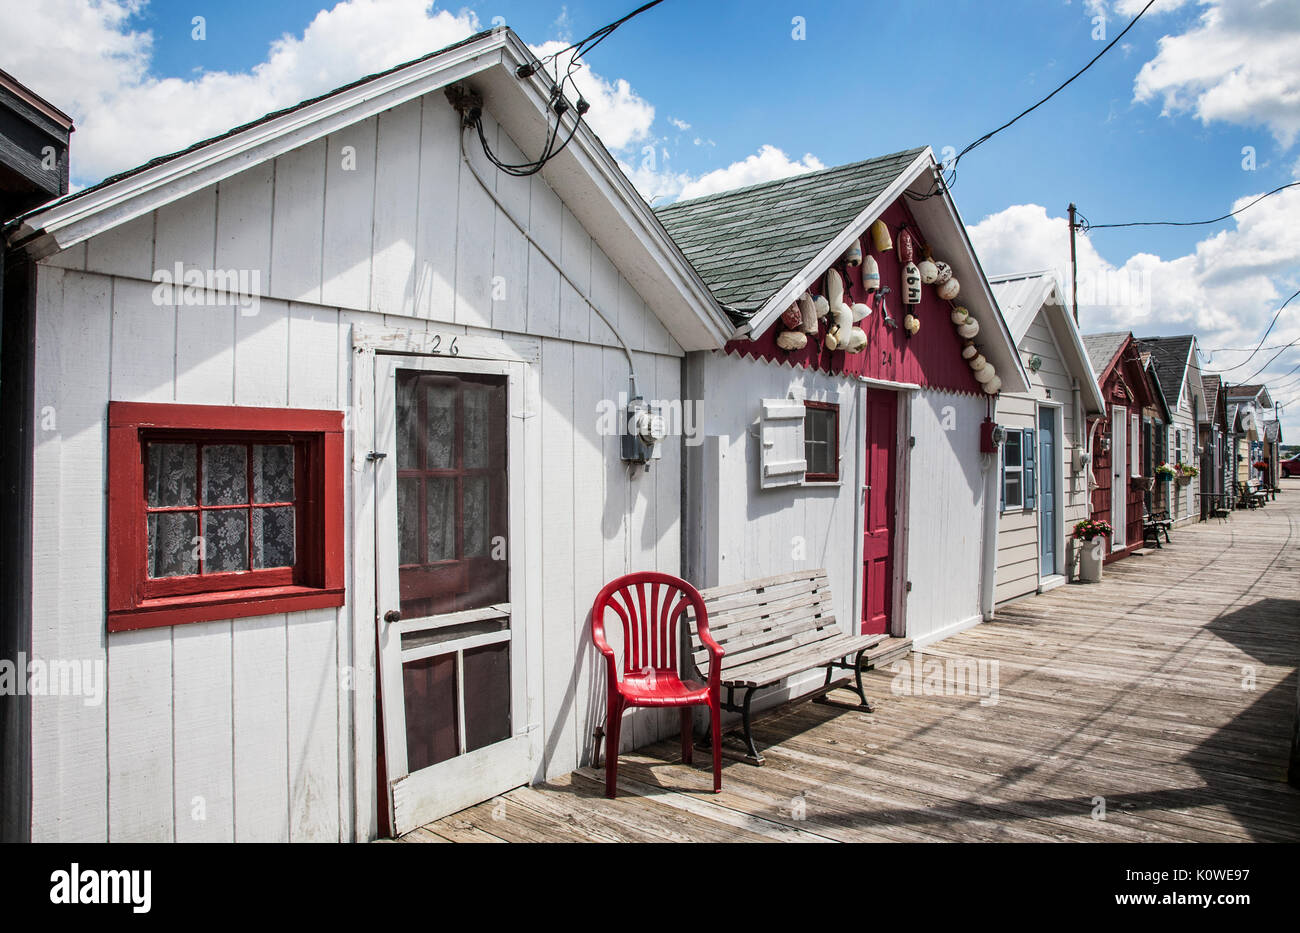 Historische Canandaigua City Pier Boathouse Row, Finger Lakes, Arapiraca, Upstate New York, USA, US, Juli 2017 historische Vintage Bilder Stockfoto